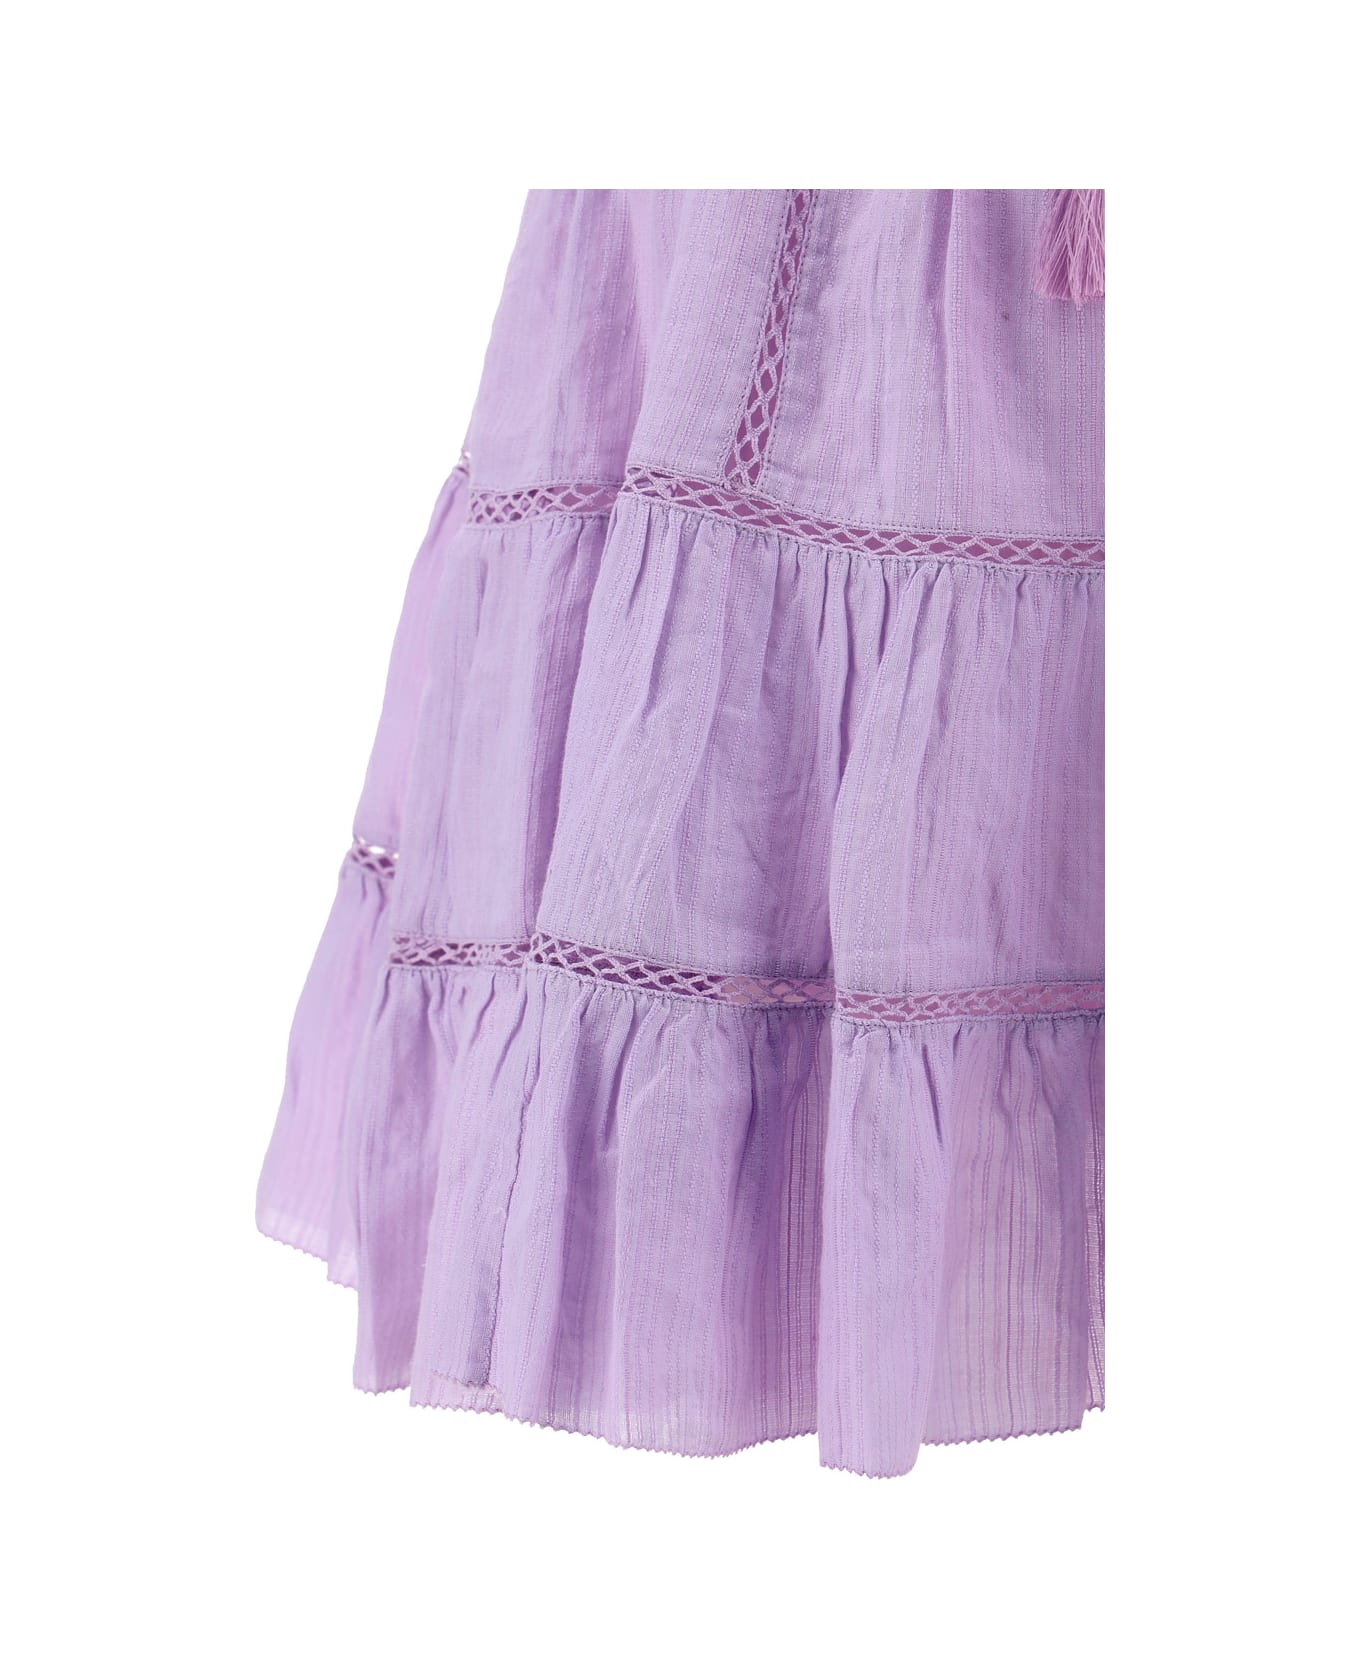 Marant Étoile Lioline Skirt - Lilac